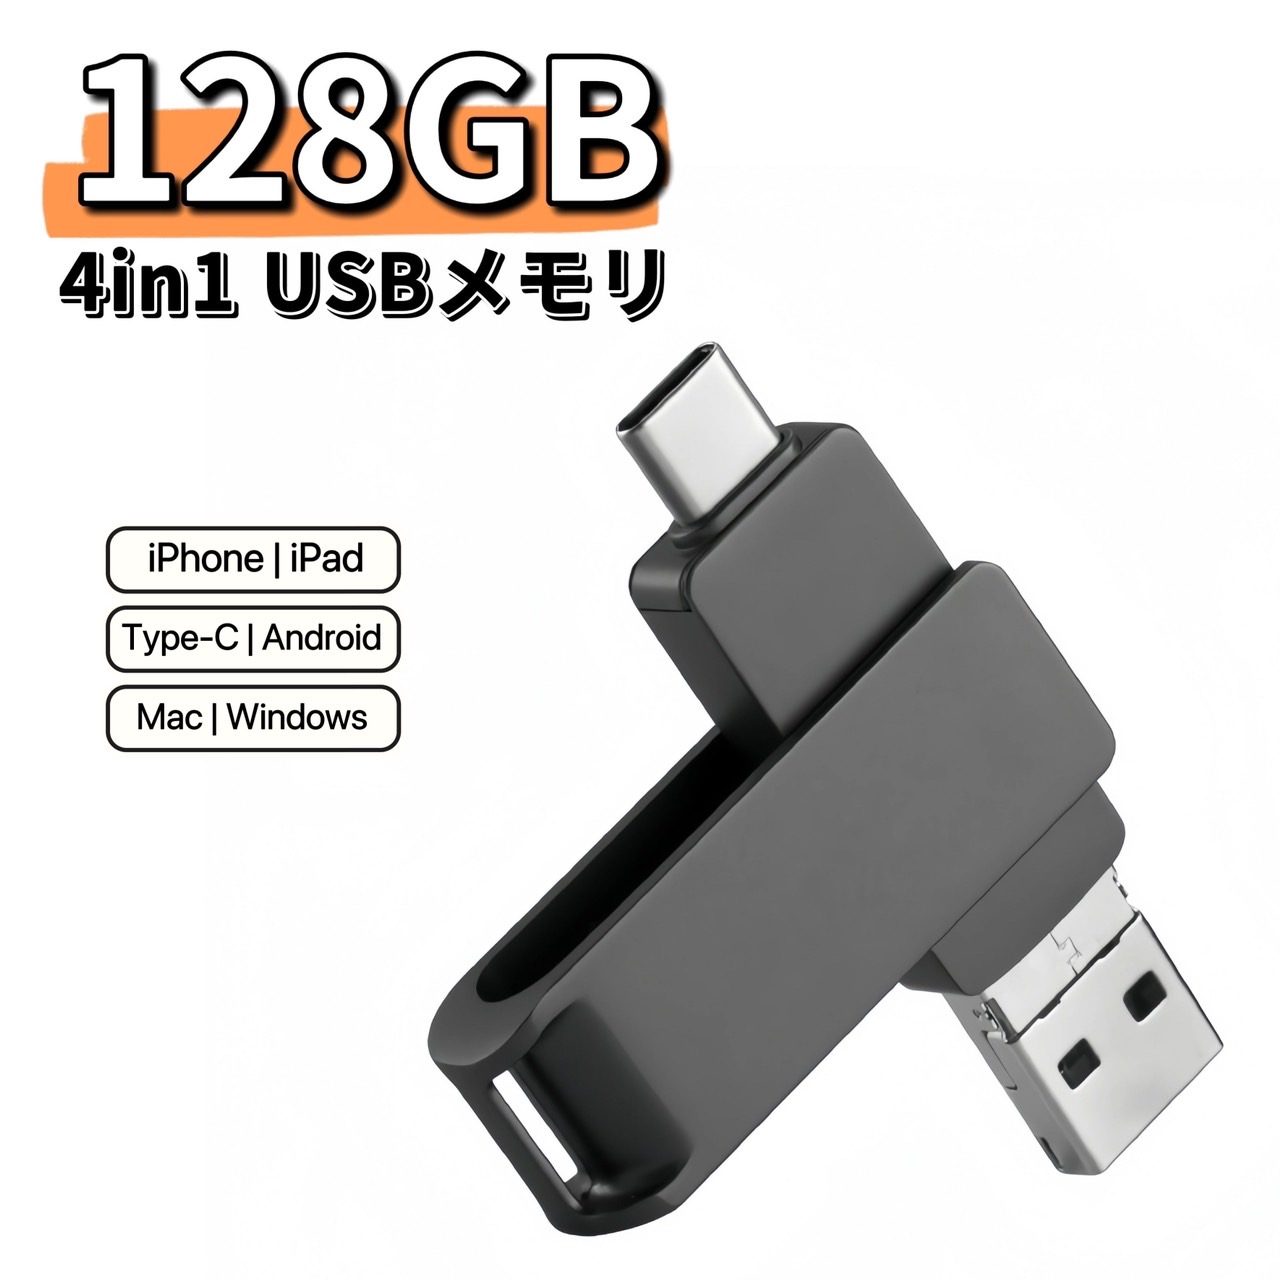 iPhone USBメモリ 128GB 4in1 Android Mac スマホ USB3.0 フラッシュ